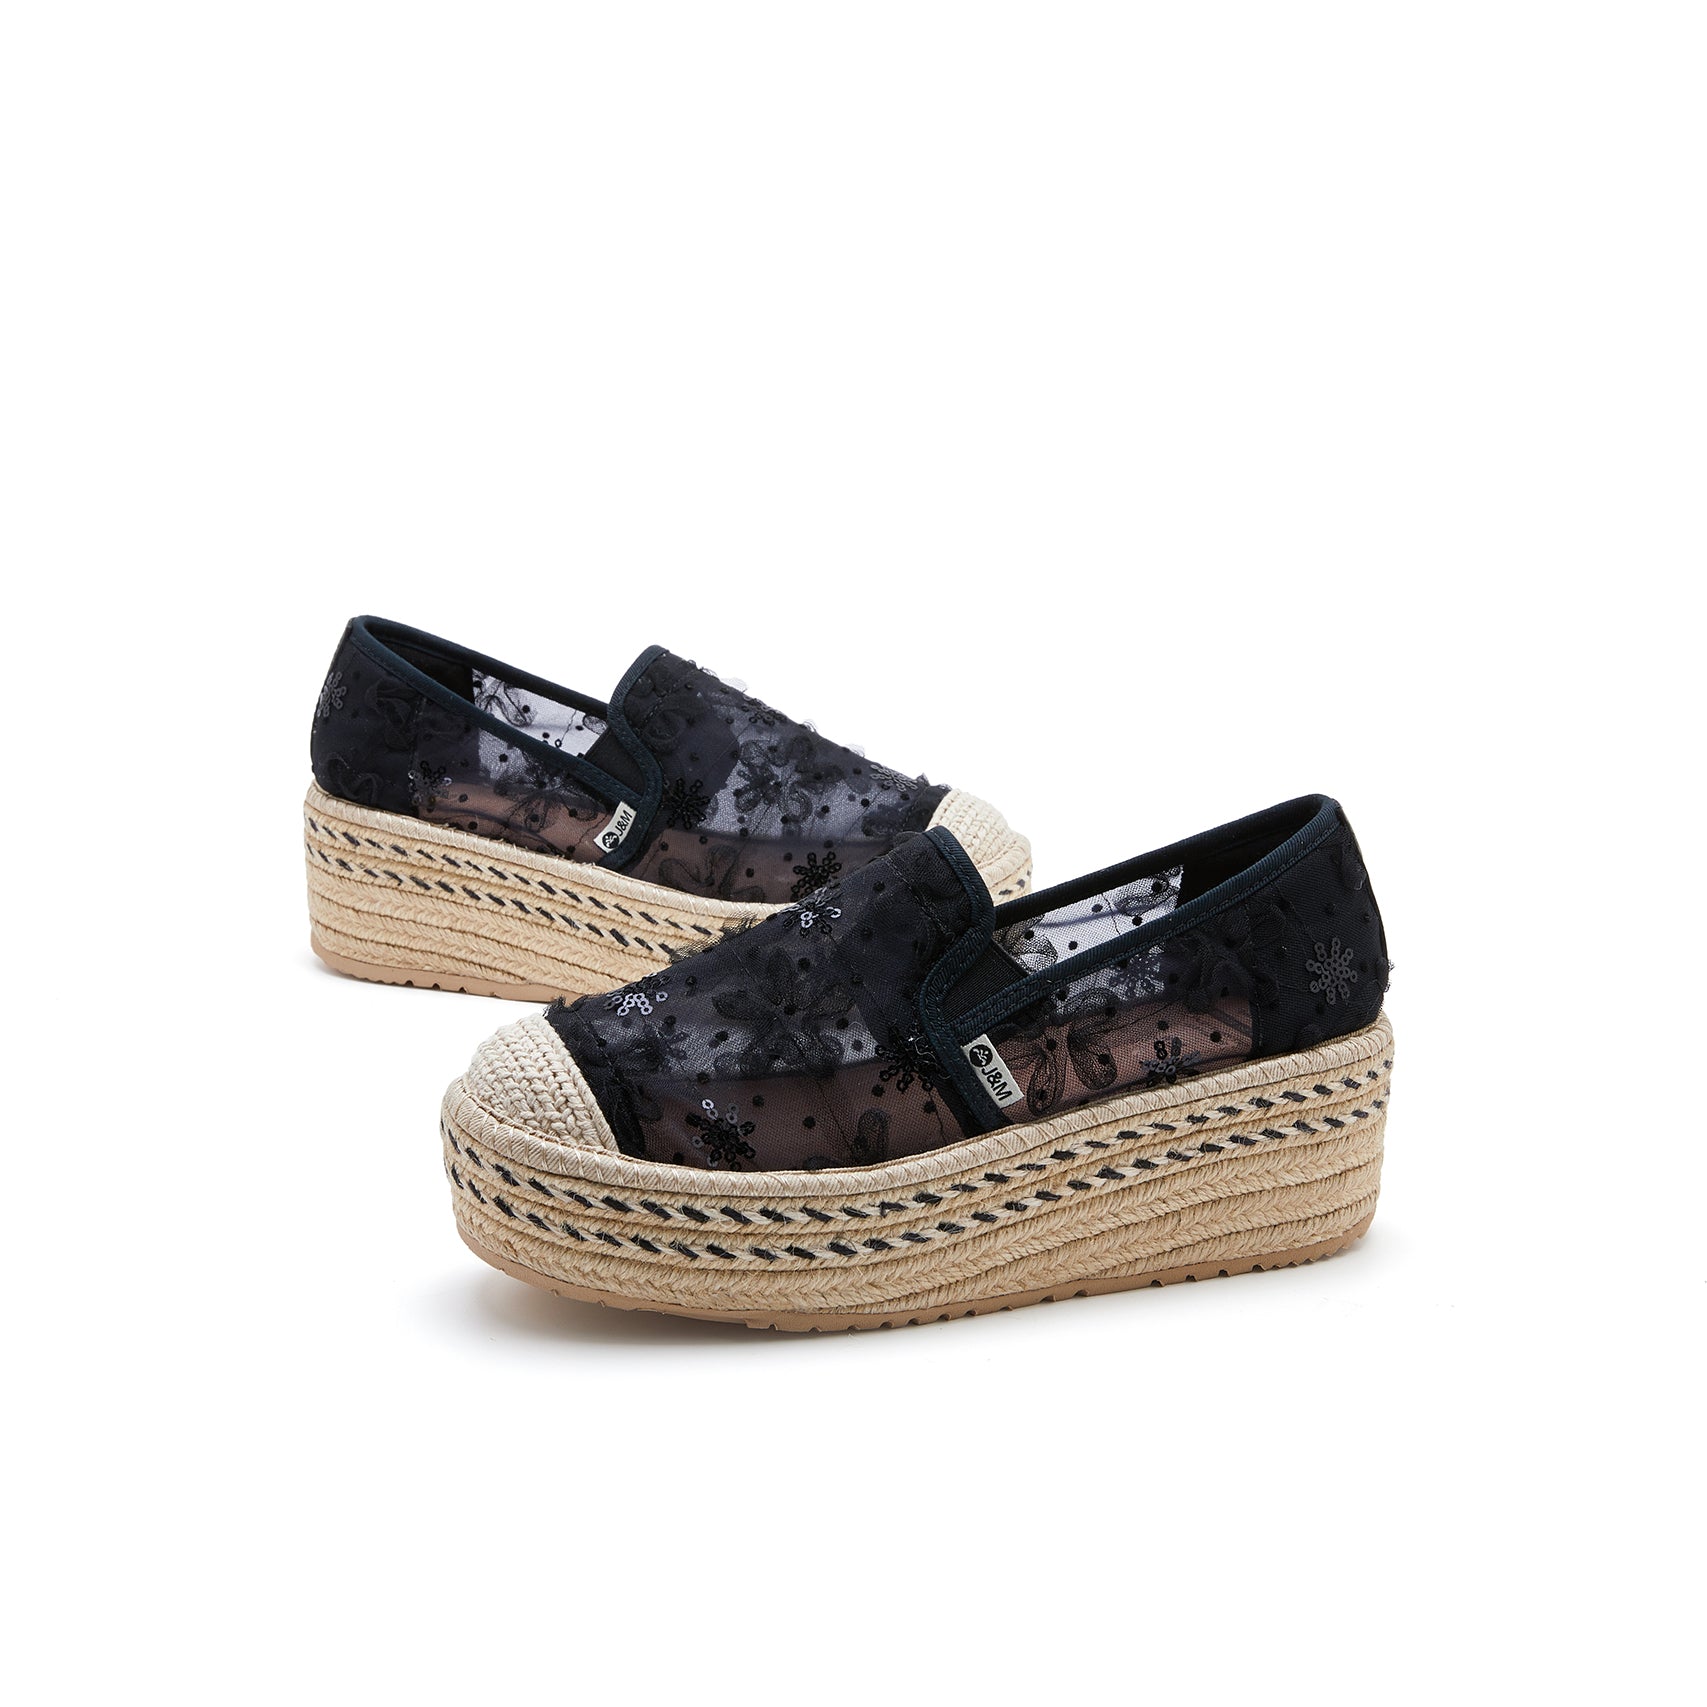 JOY&MARIO Handmade Women’s Slip-On Espadrille Mesh Loafers in Black-86178W